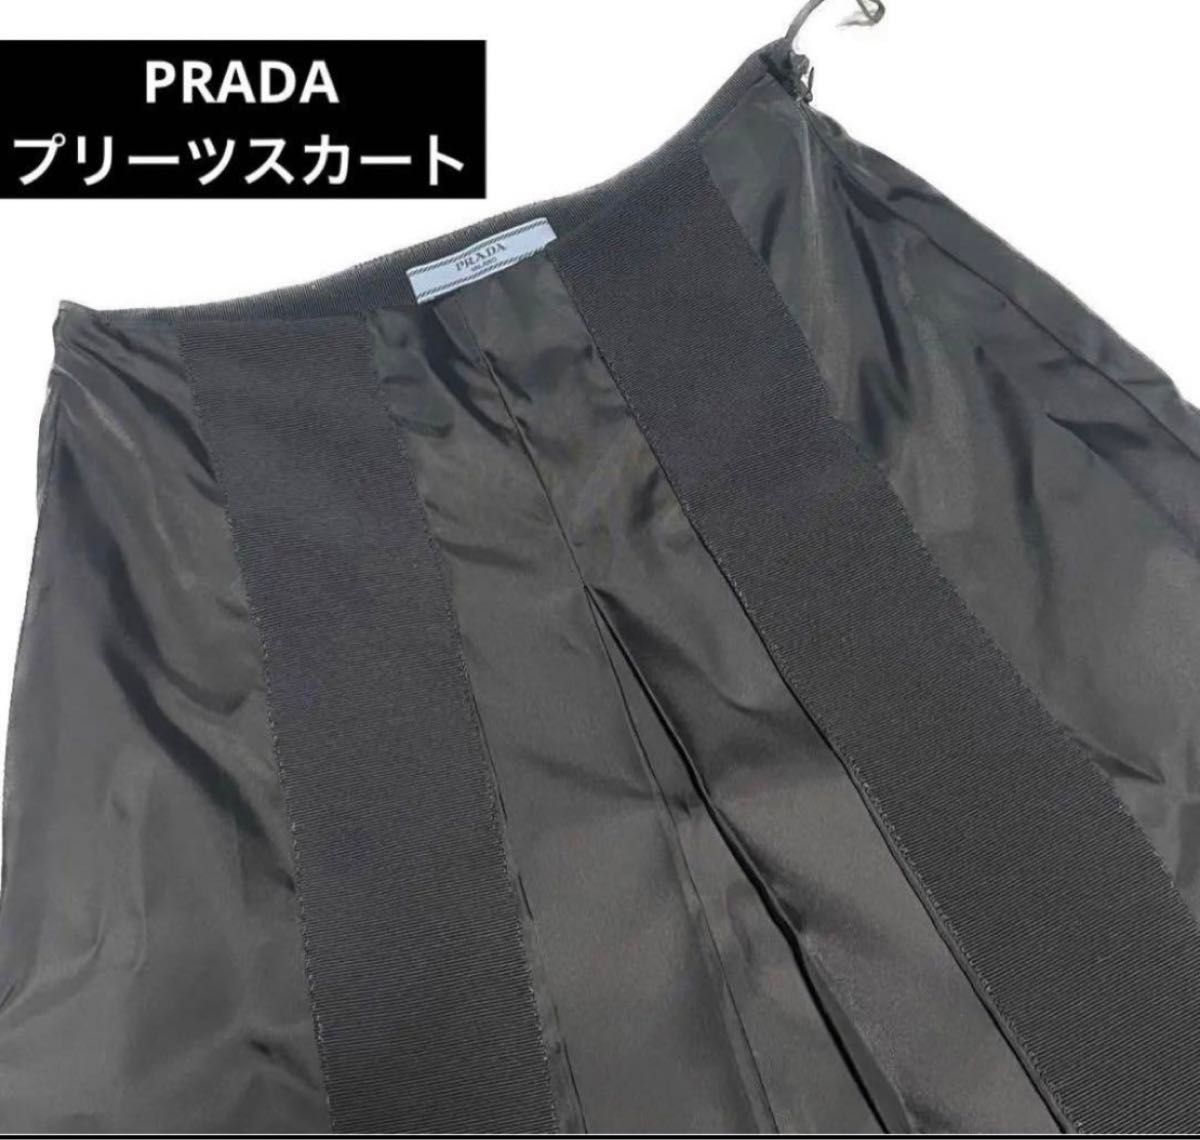 PRADA プラダ スカート プリーツ ブラック 台形 切替デザイン 36